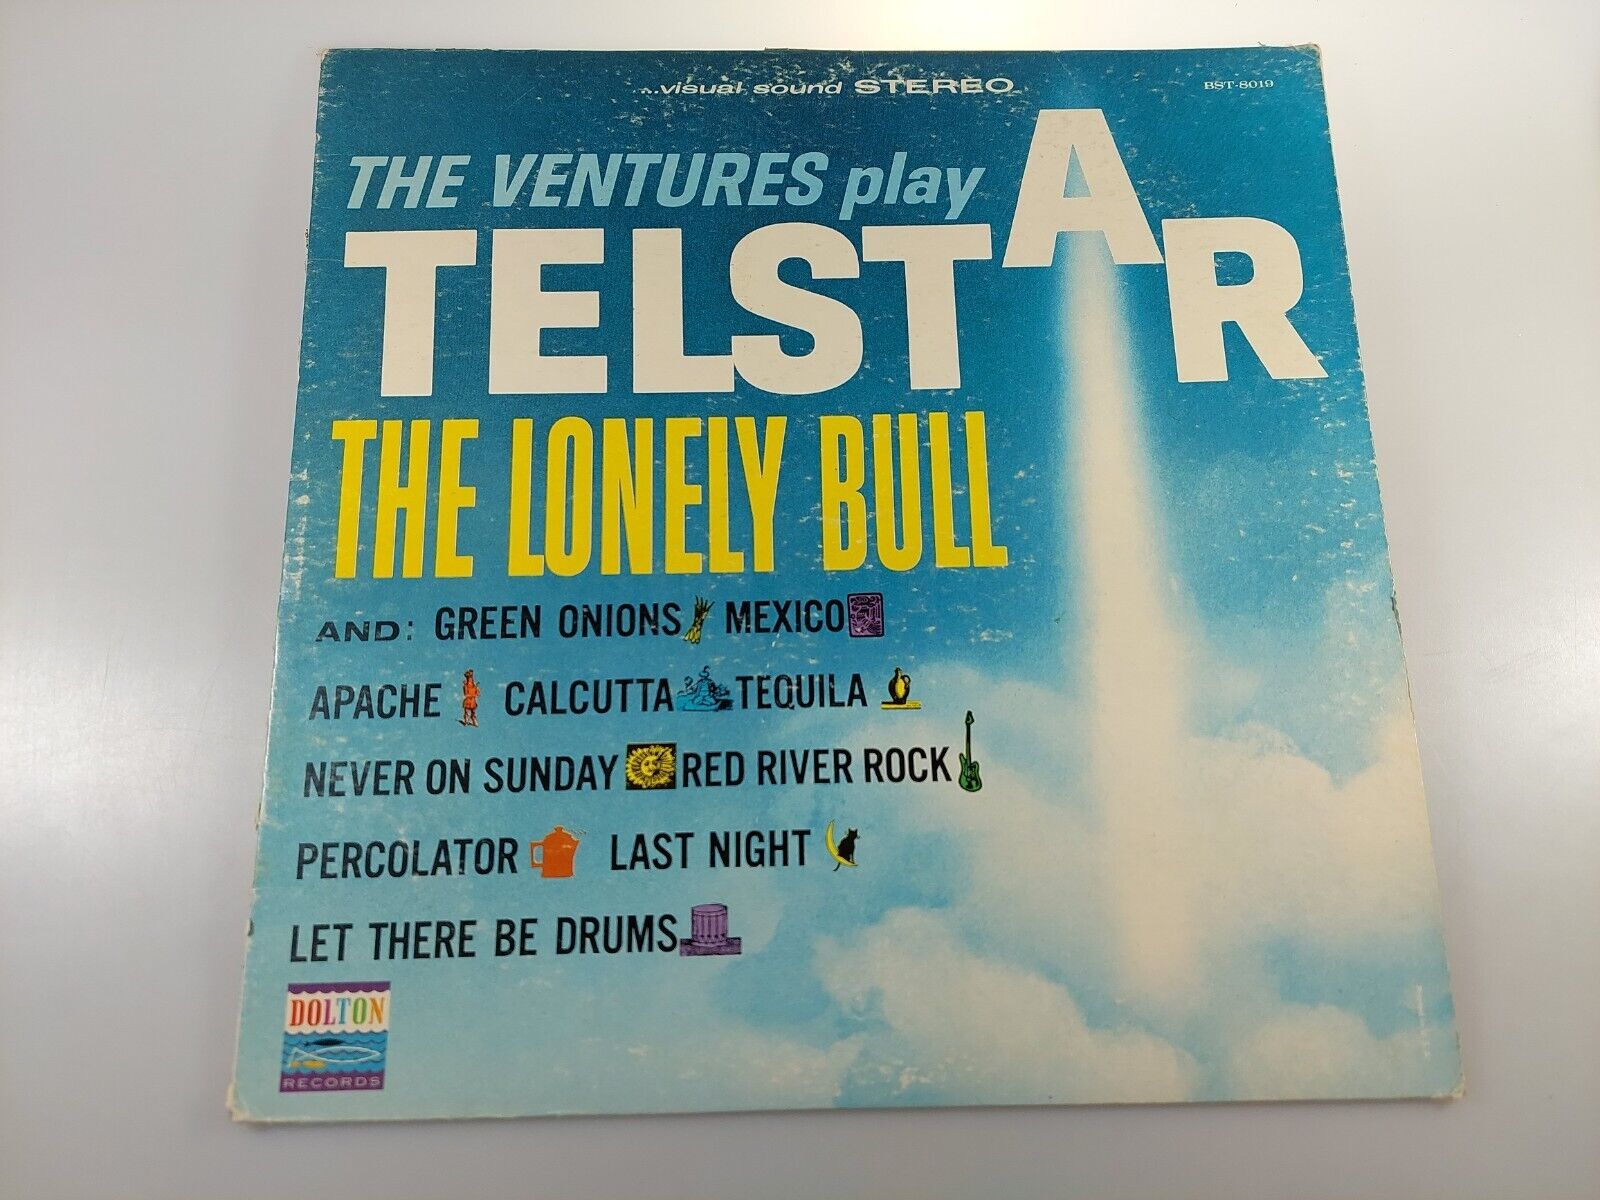 The Ventures - Play Telstar, Lonely Bull - 1962 Vinyl LP - Surf Guitar FREESHIP 